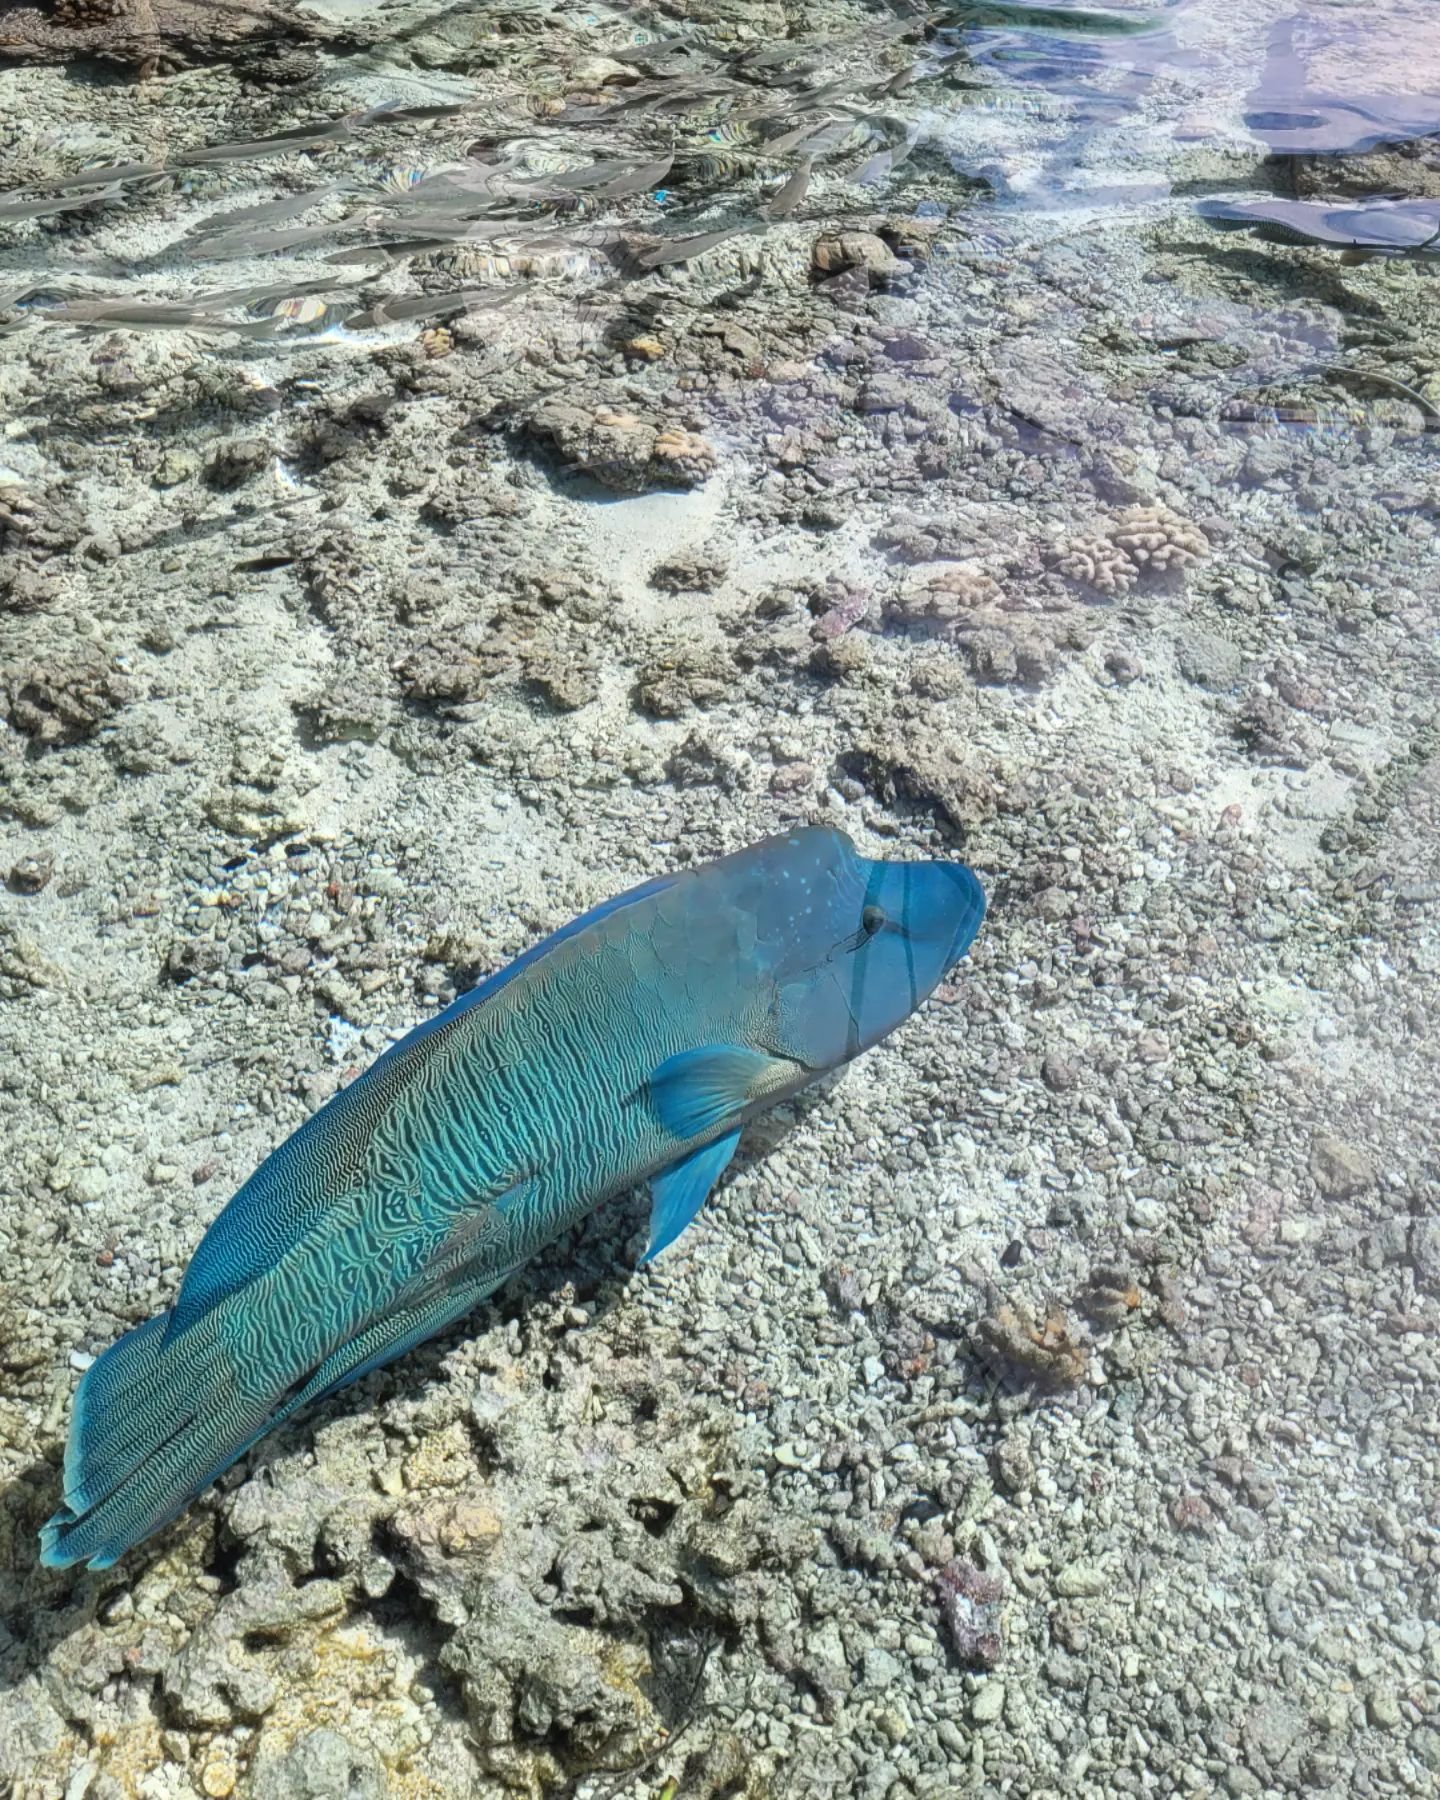 About this morning ...
#napoleon #wrasse #fakarava #tuamotu #underwater #islands #aquarium #natural #enjoying